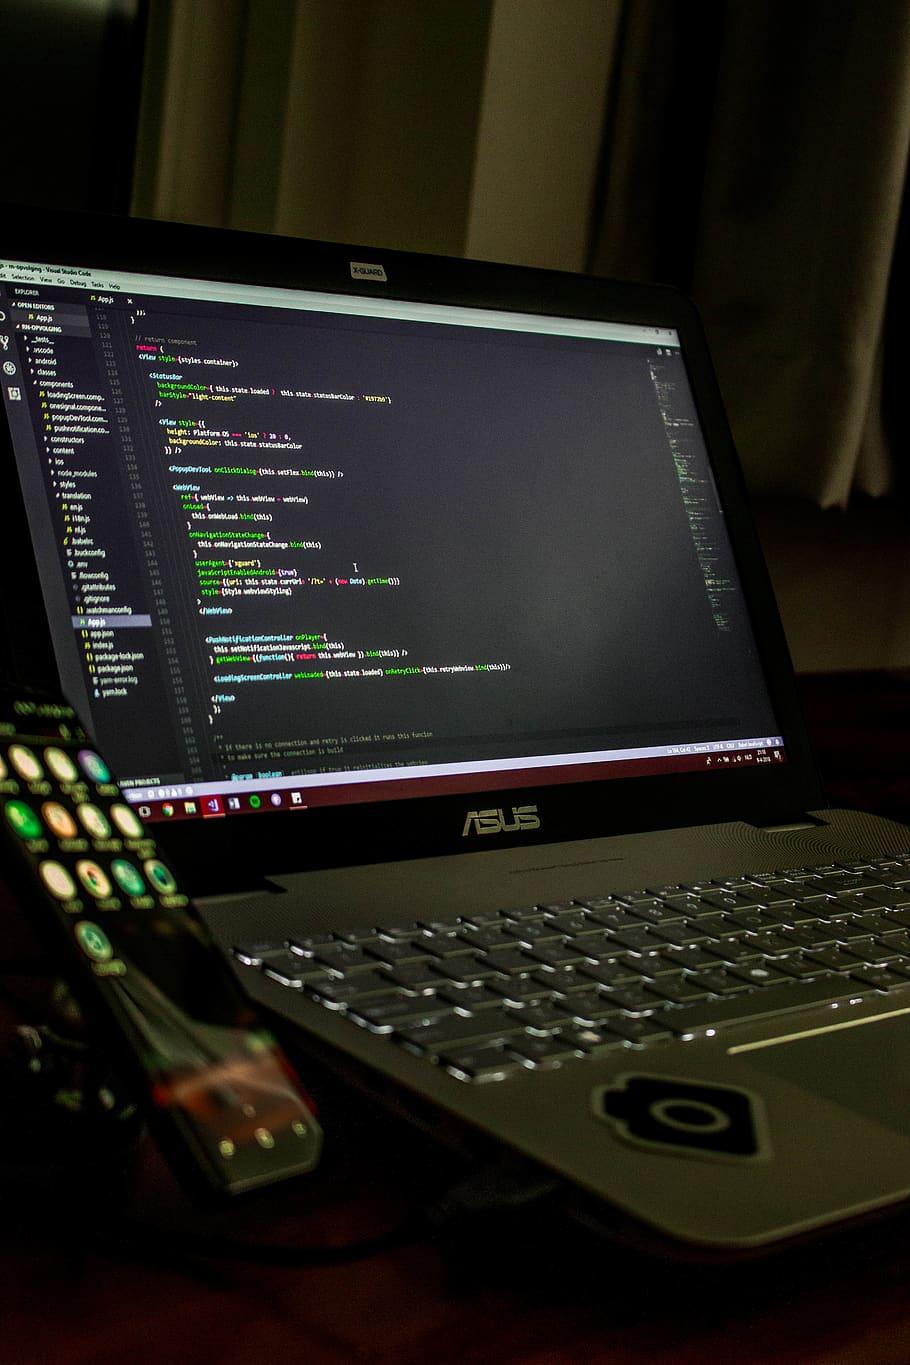 Wallpaper programming, laptop, code, coding for mobile and desktop